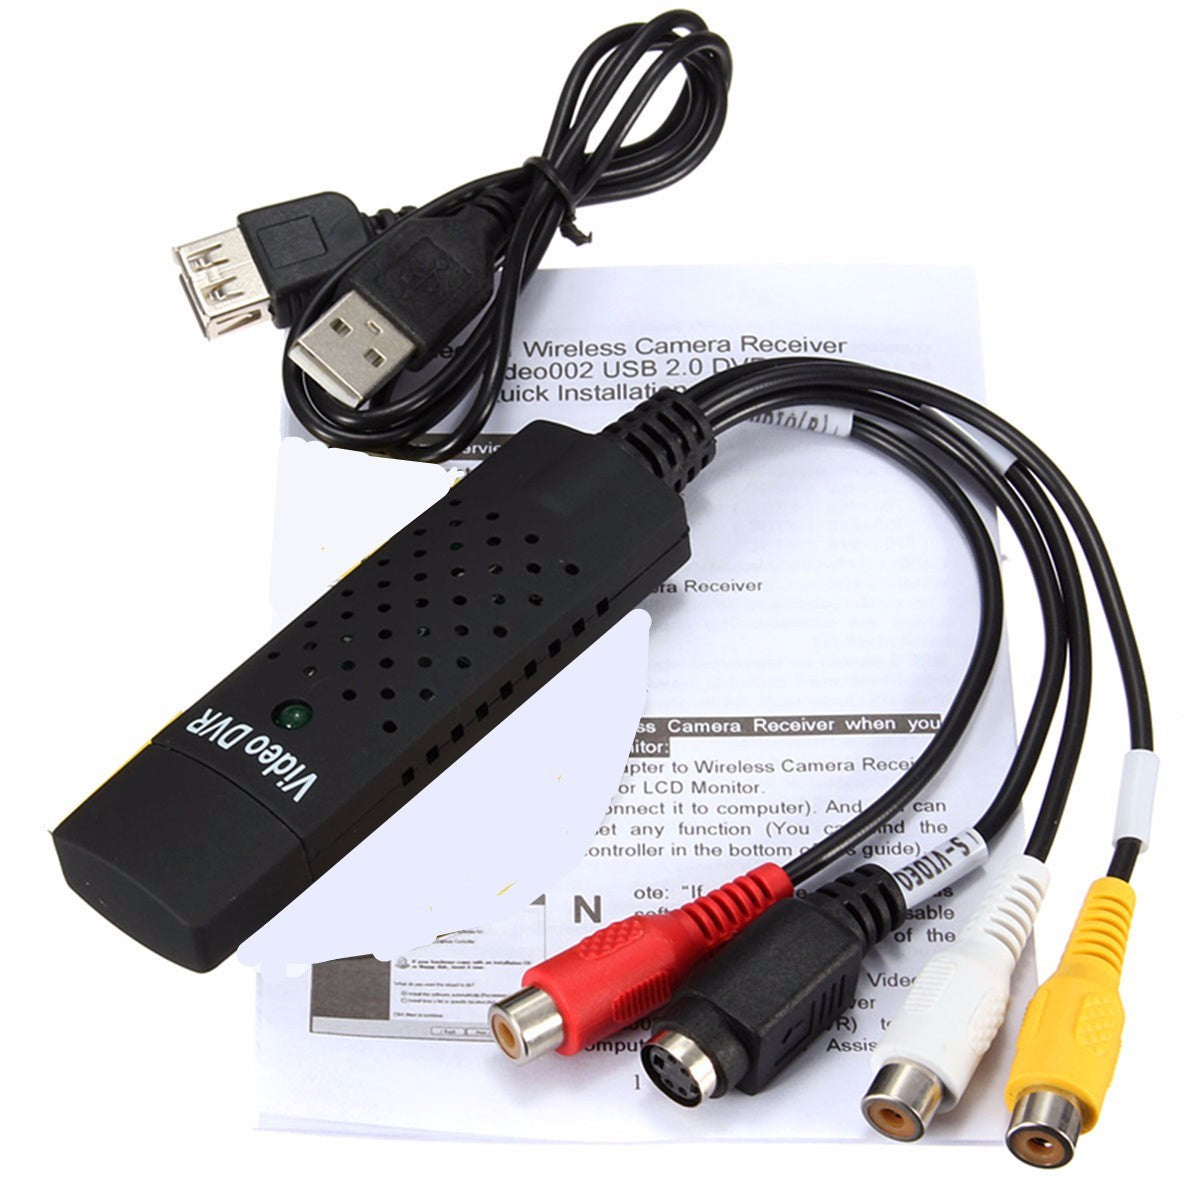 DC5V USB Video Capture Card TV Tuner LED VCR DVD Audio Adapter Converter